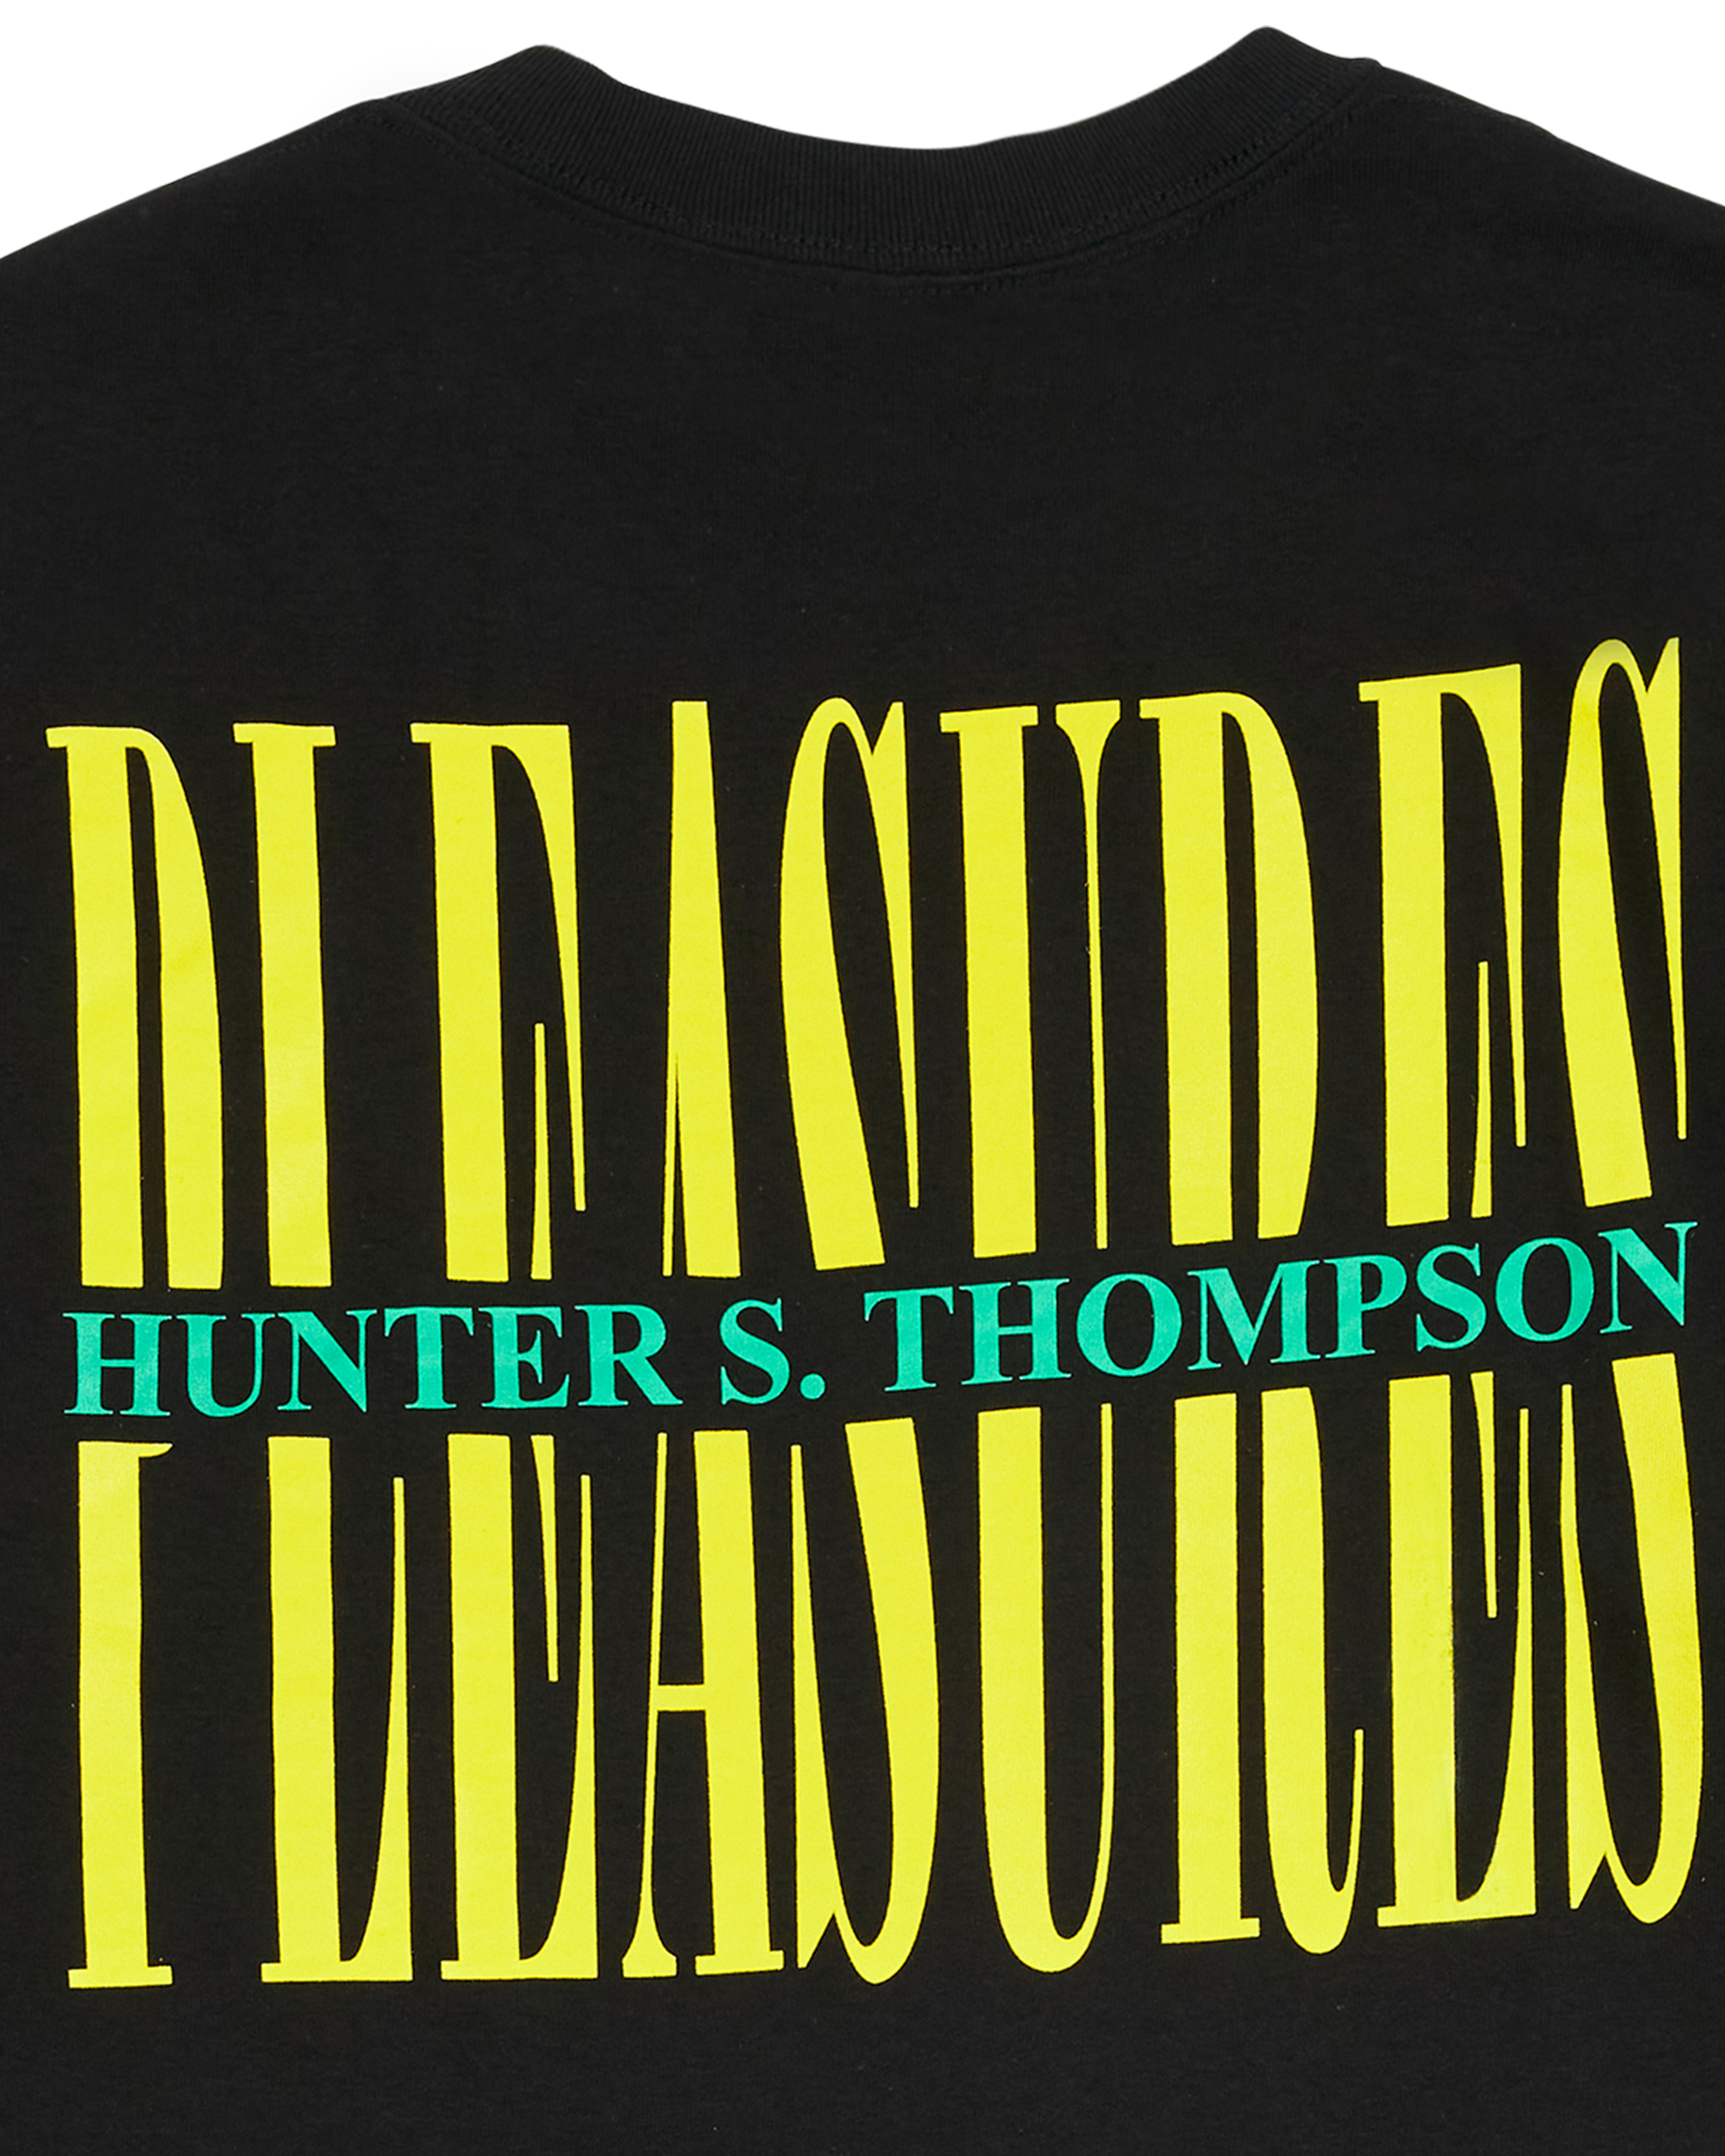 Hunter S. Thompson No Smoking T-shirt - Black